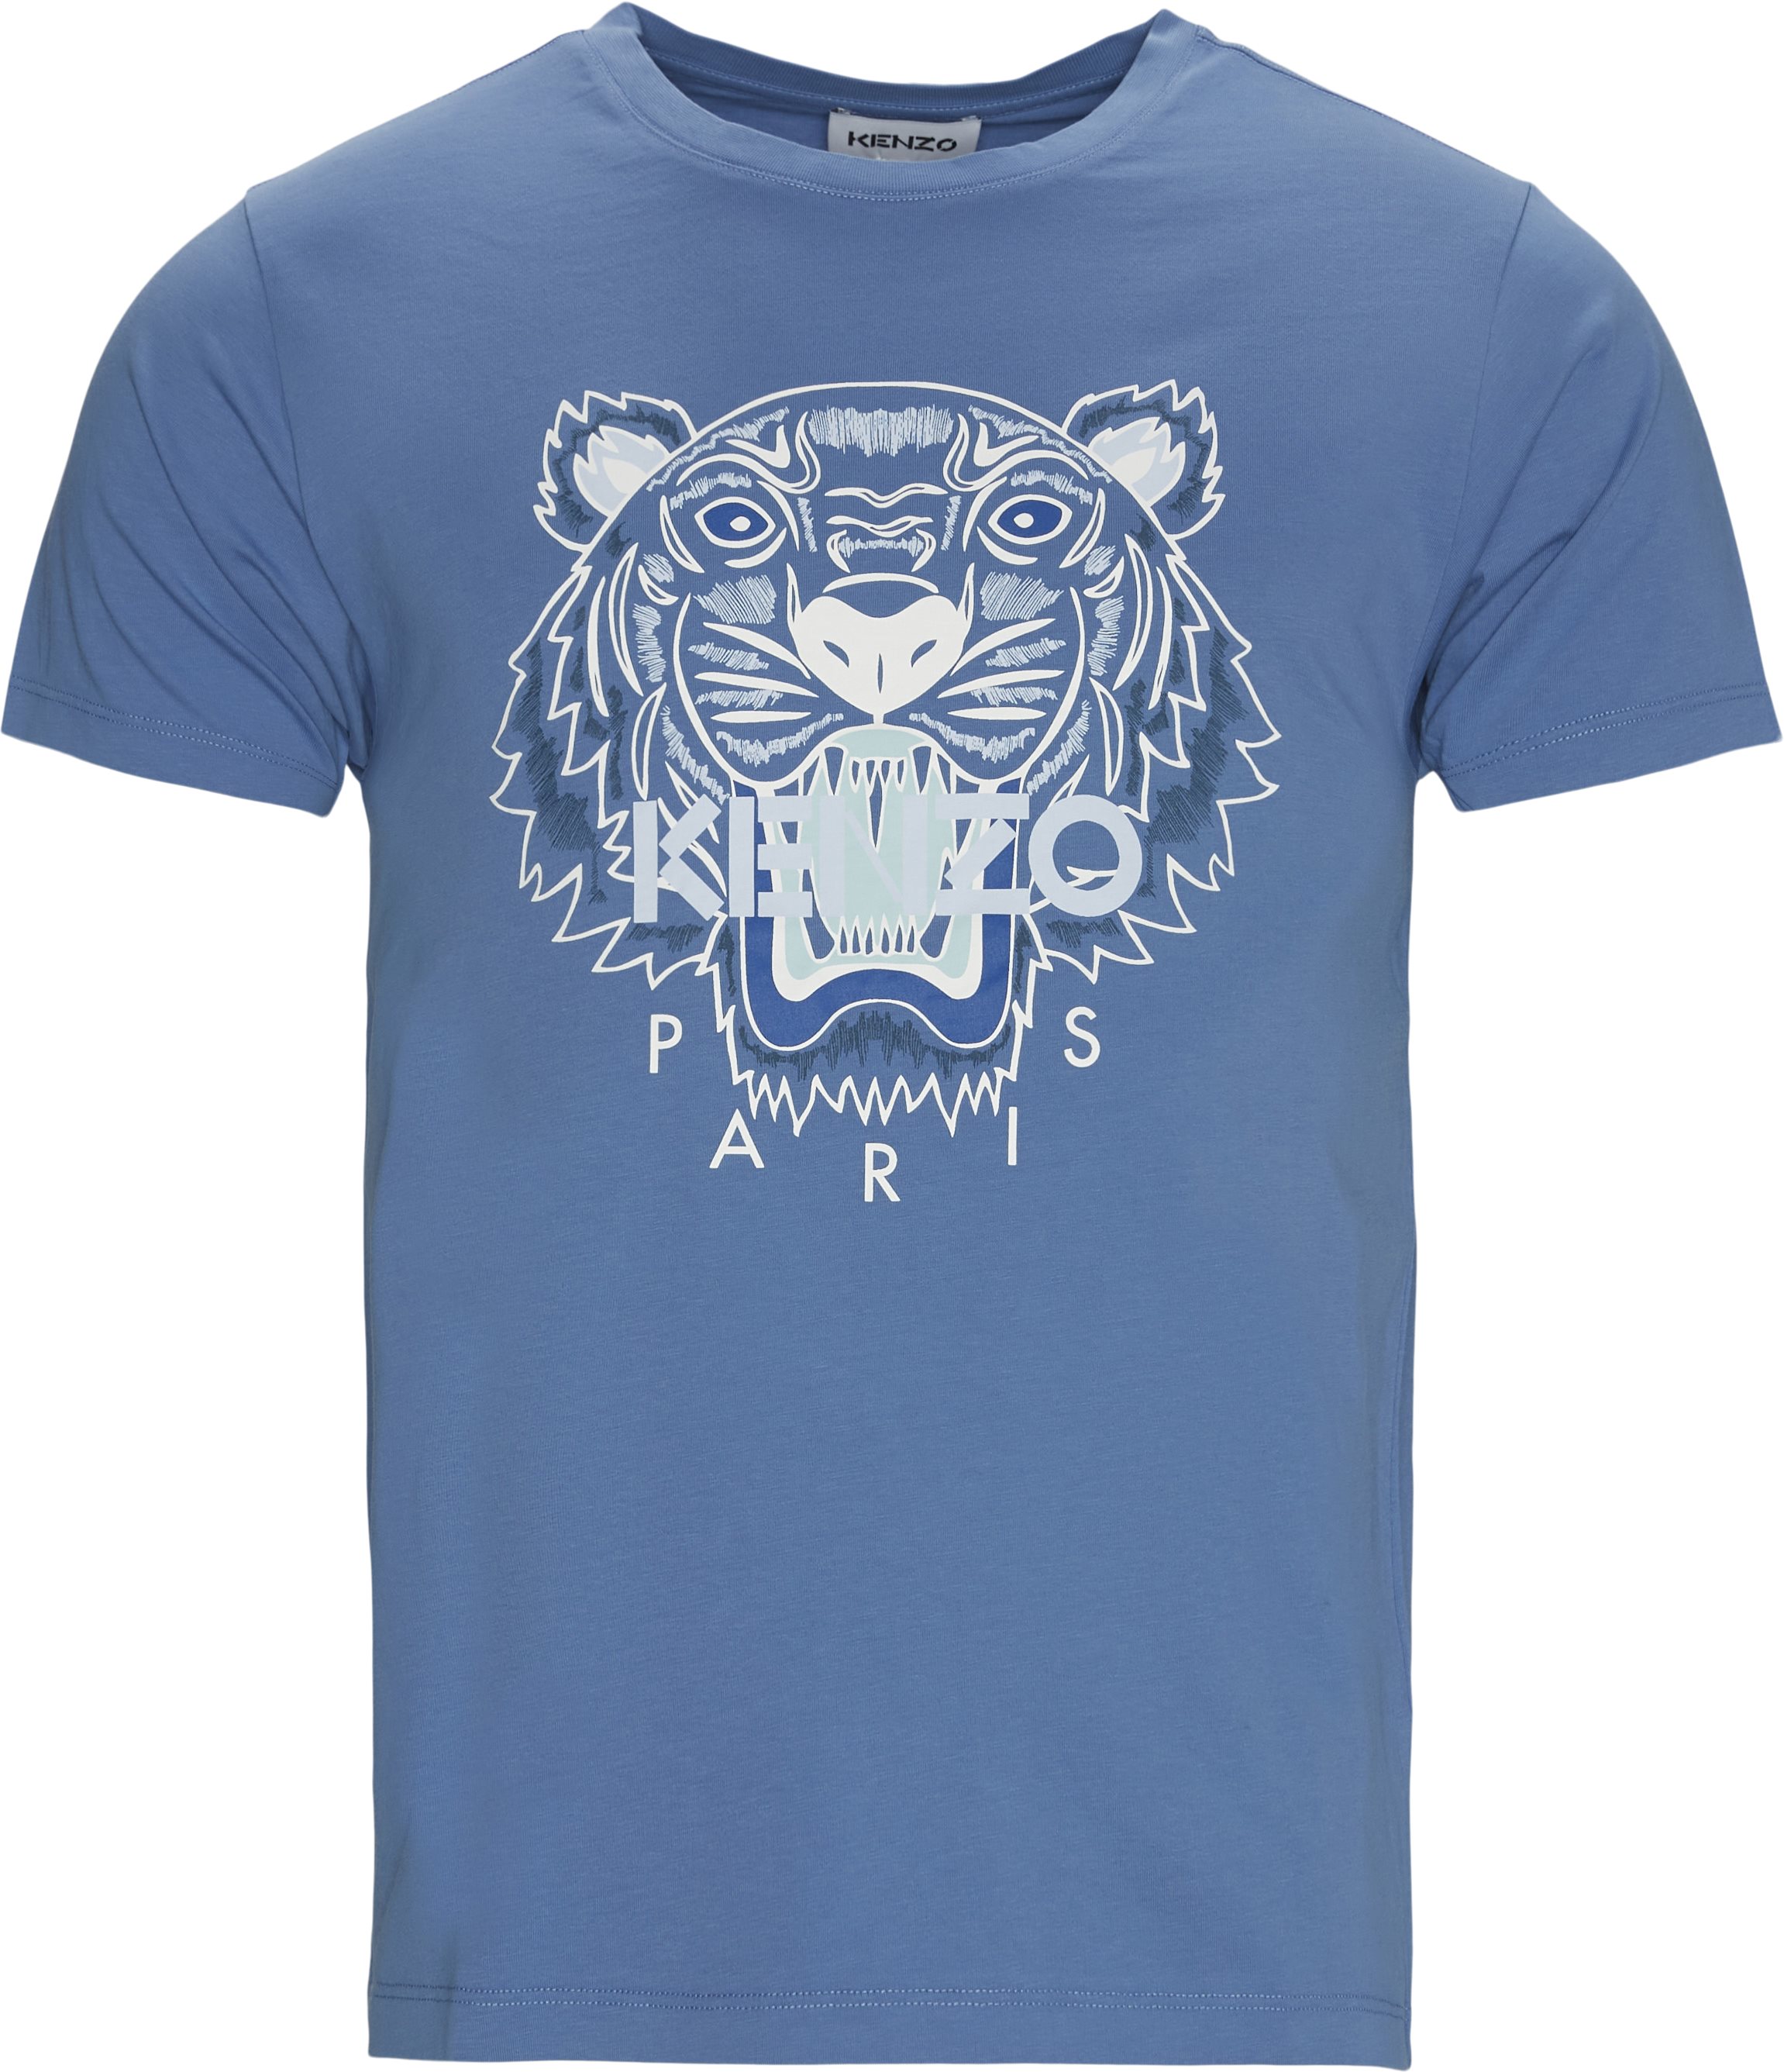 Iconic Logo Tee - T-shirts - Regular fit - Blå